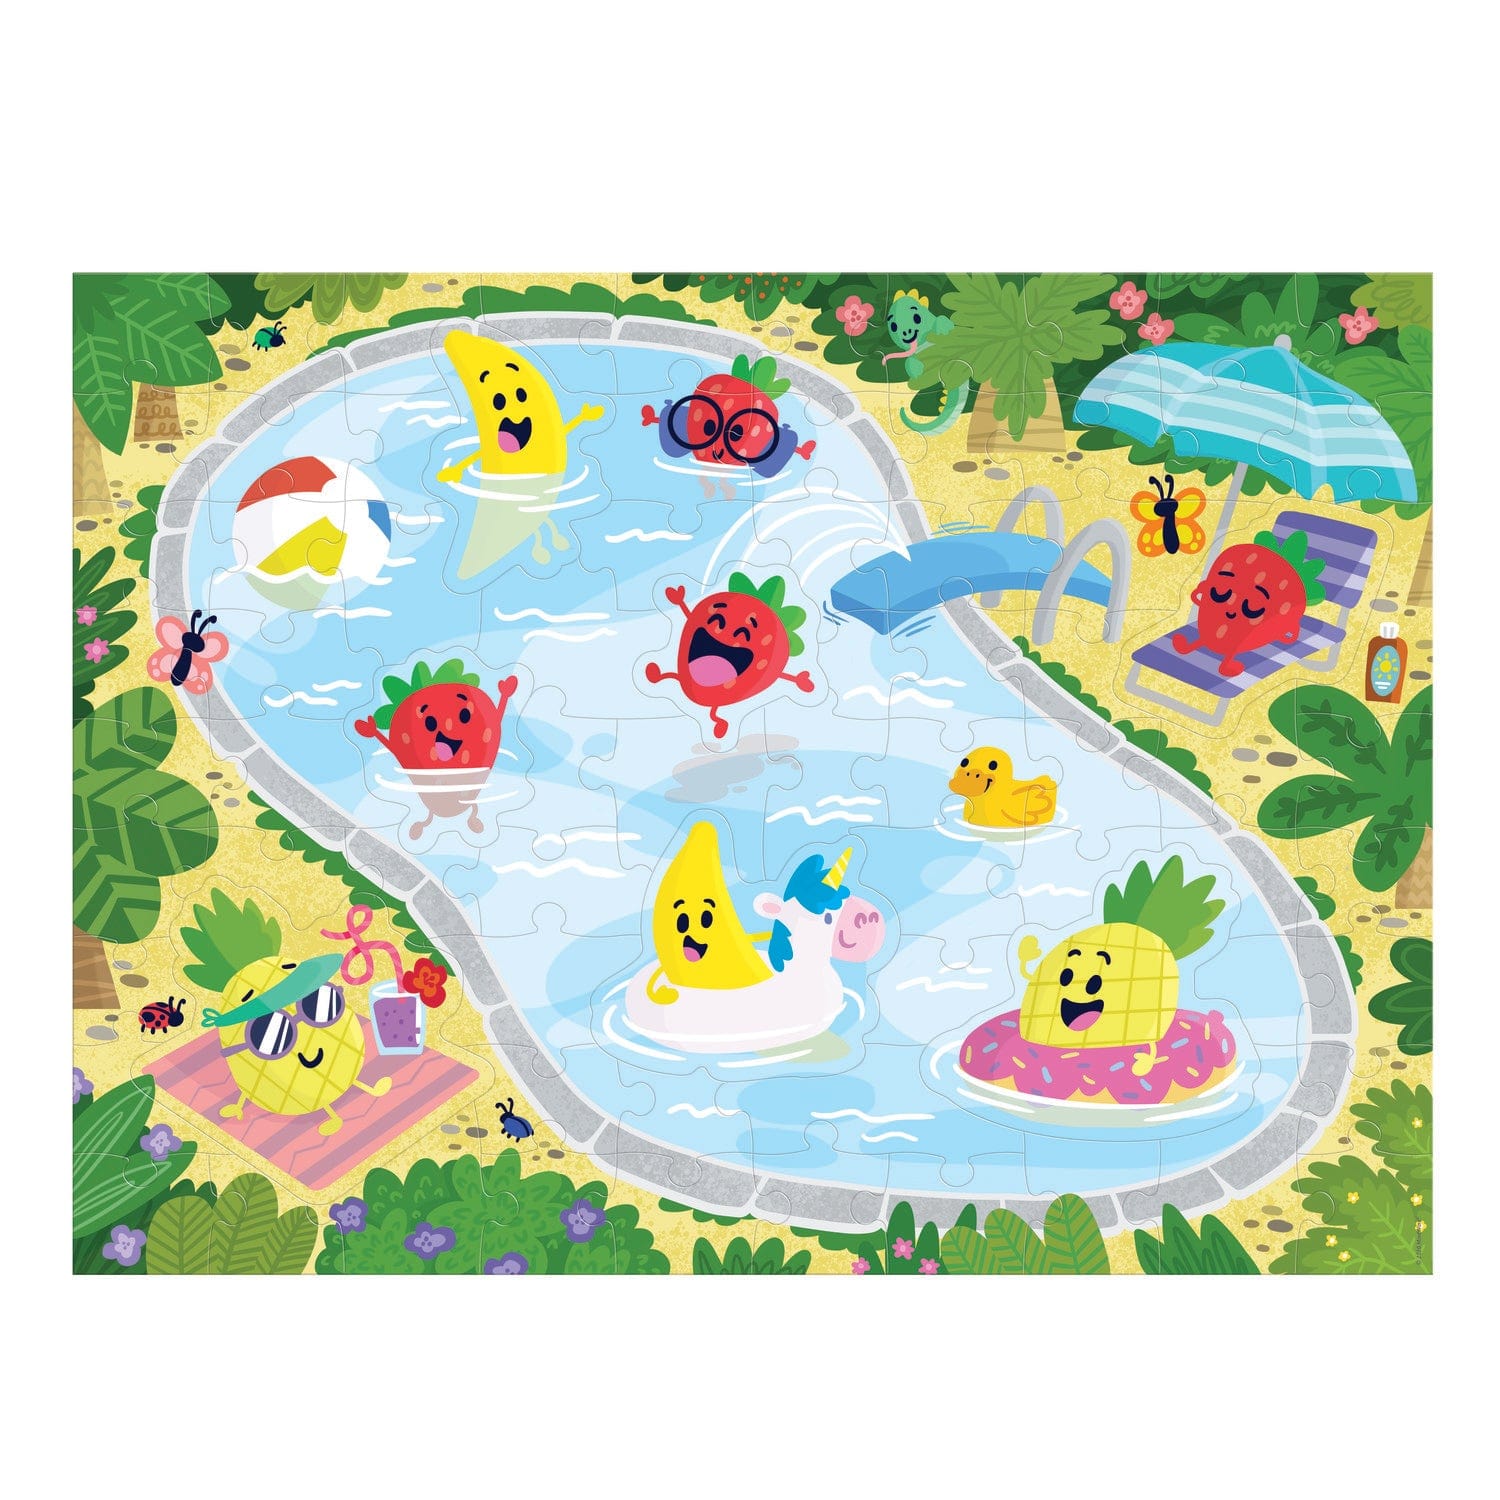 Peaceable Kingdom Floor Puzzles Peaceable Kingdom 70+ pc Scratch & Sniff Puzzle - Fruity Pool Party